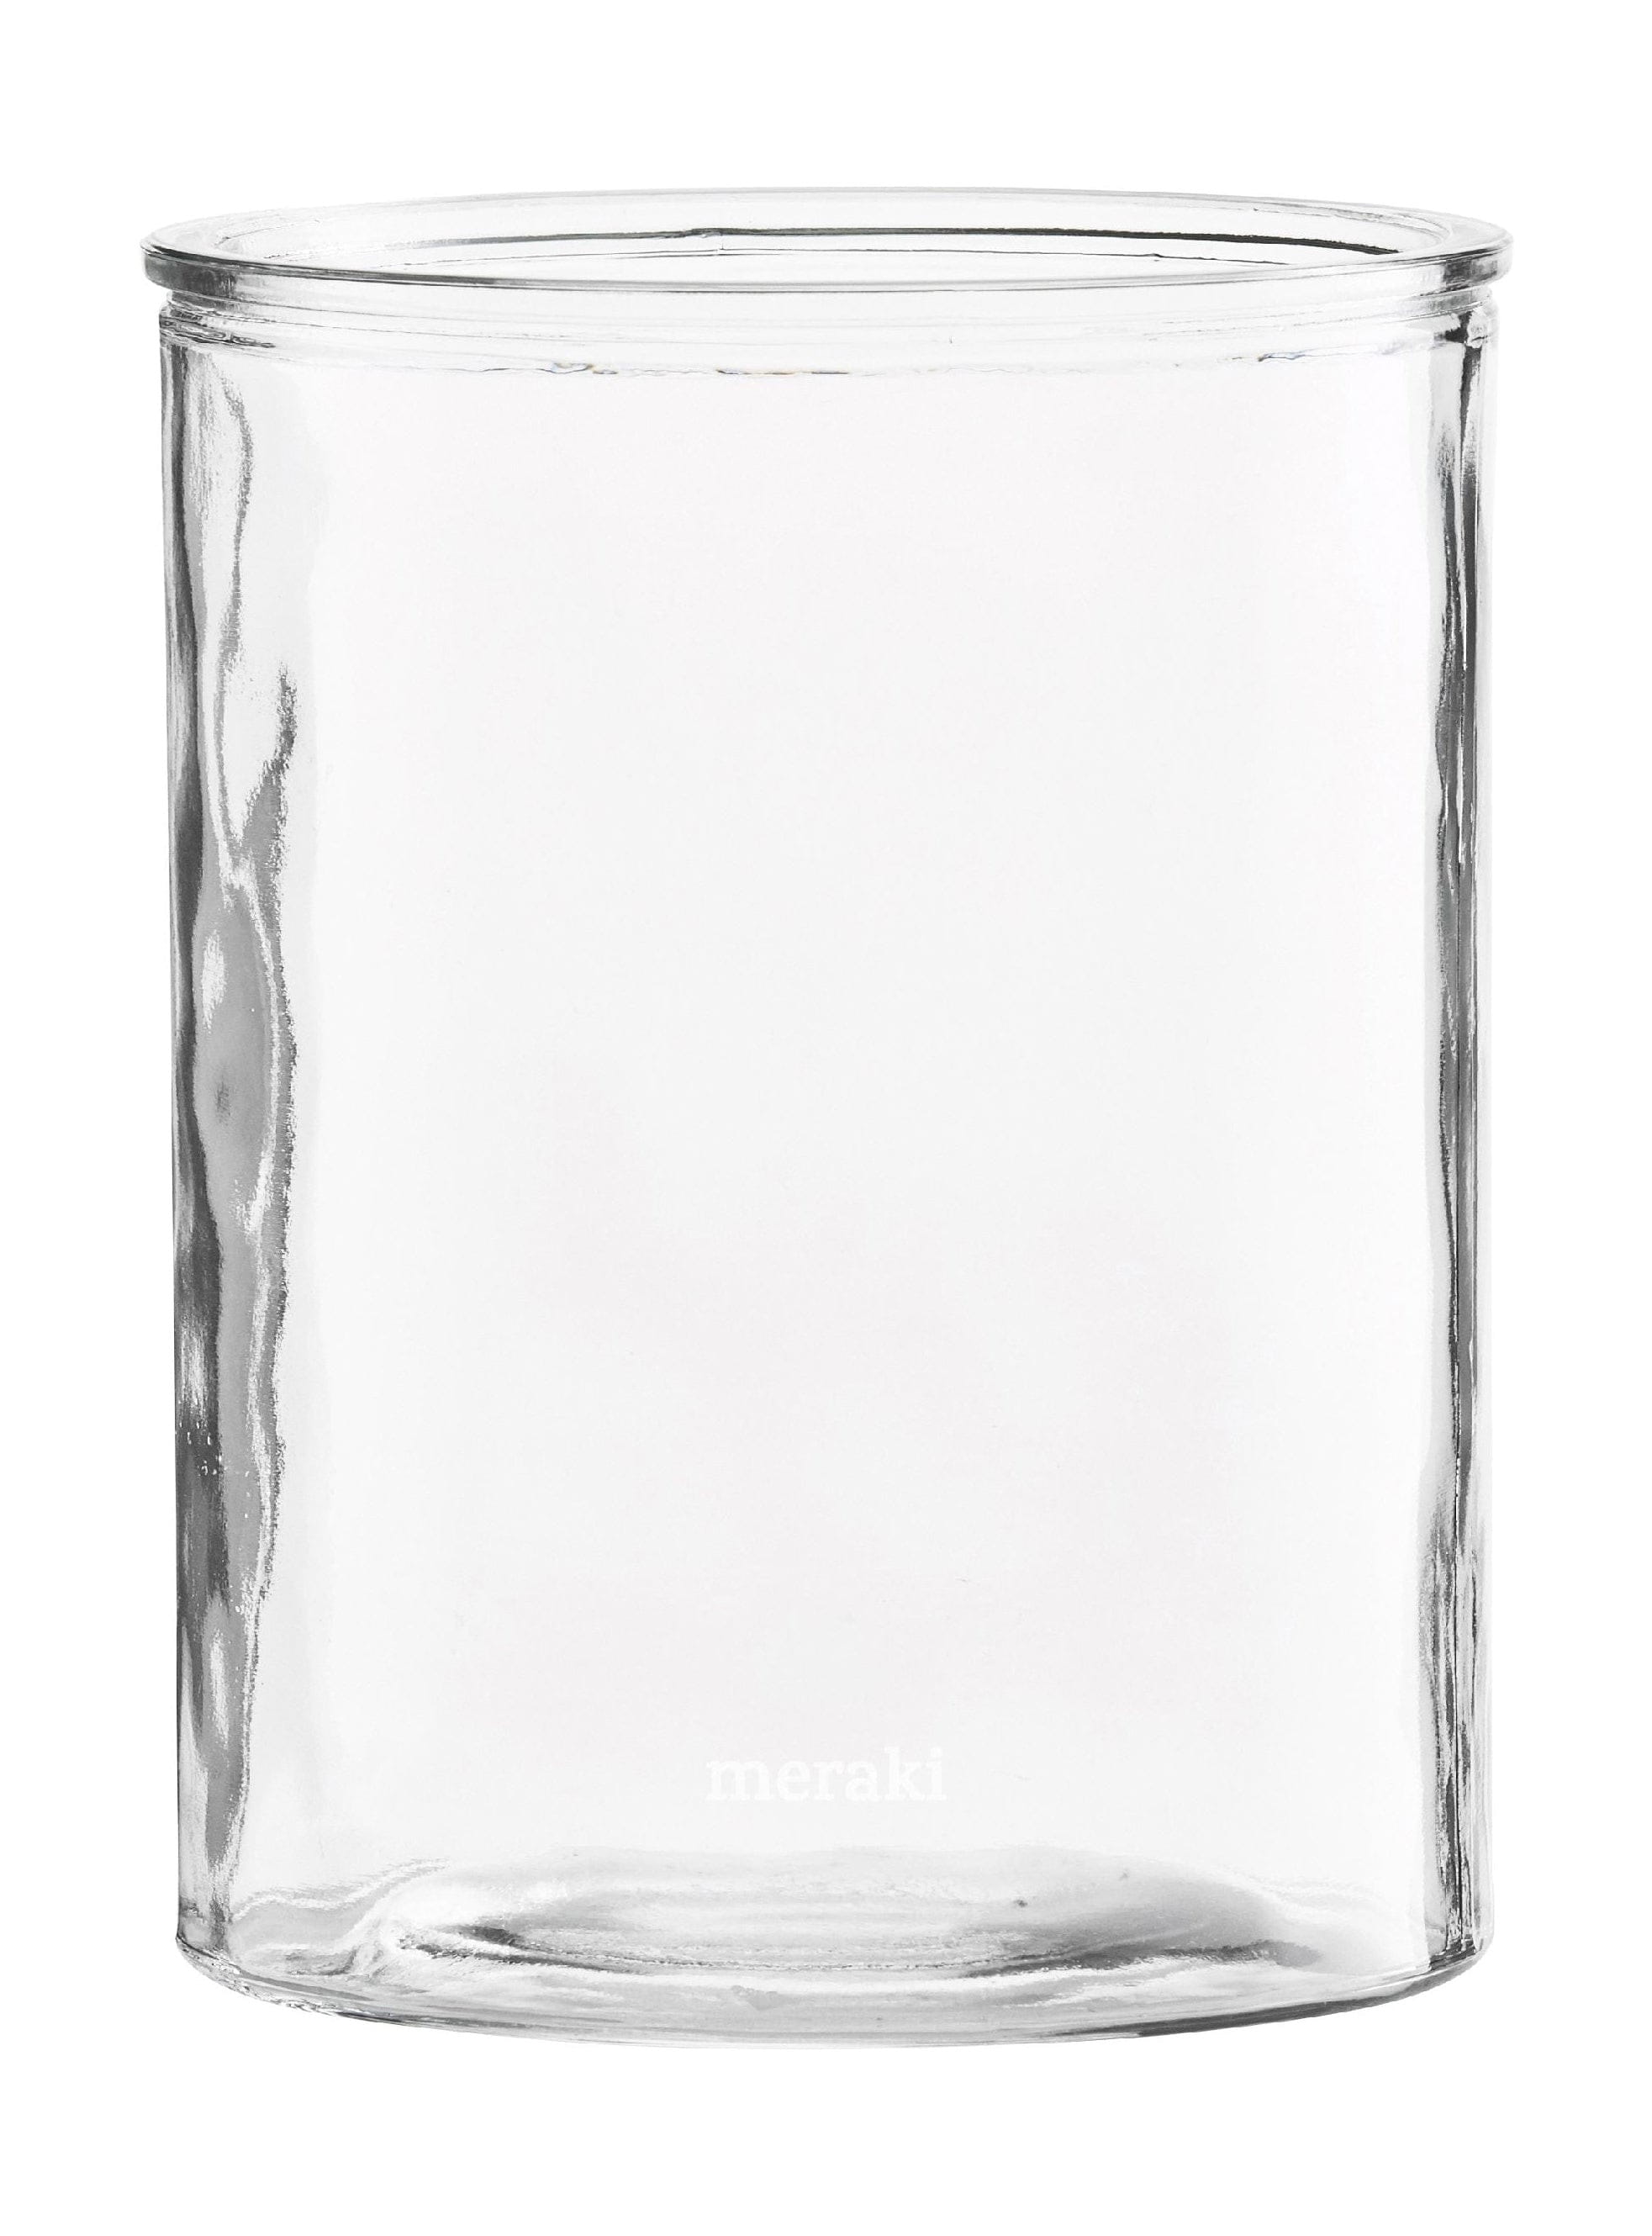 Meraki Zylinder Vase, øx H 12,5x15 Cm